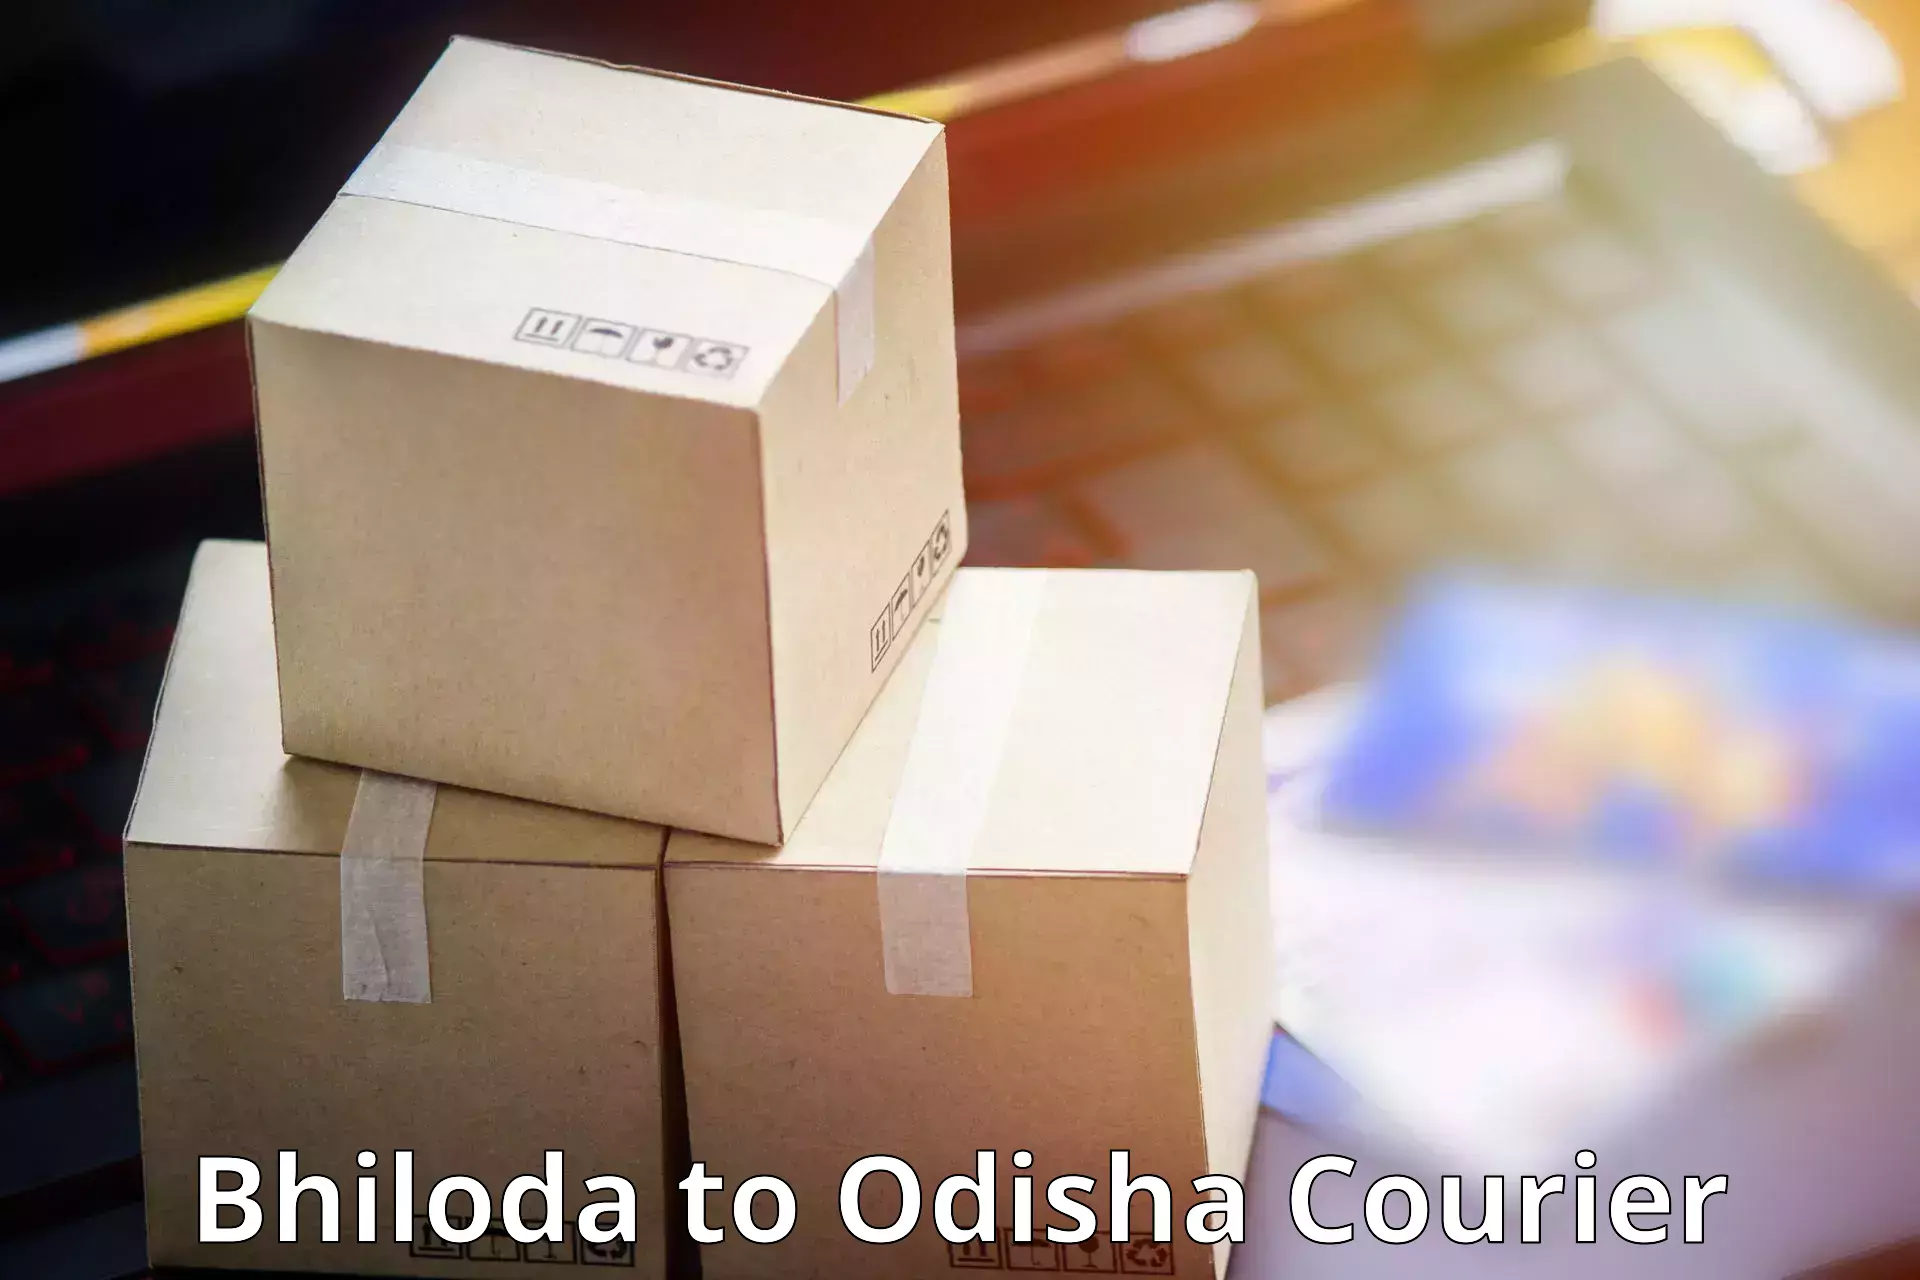 Professional courier handling Bhiloda to Balinga